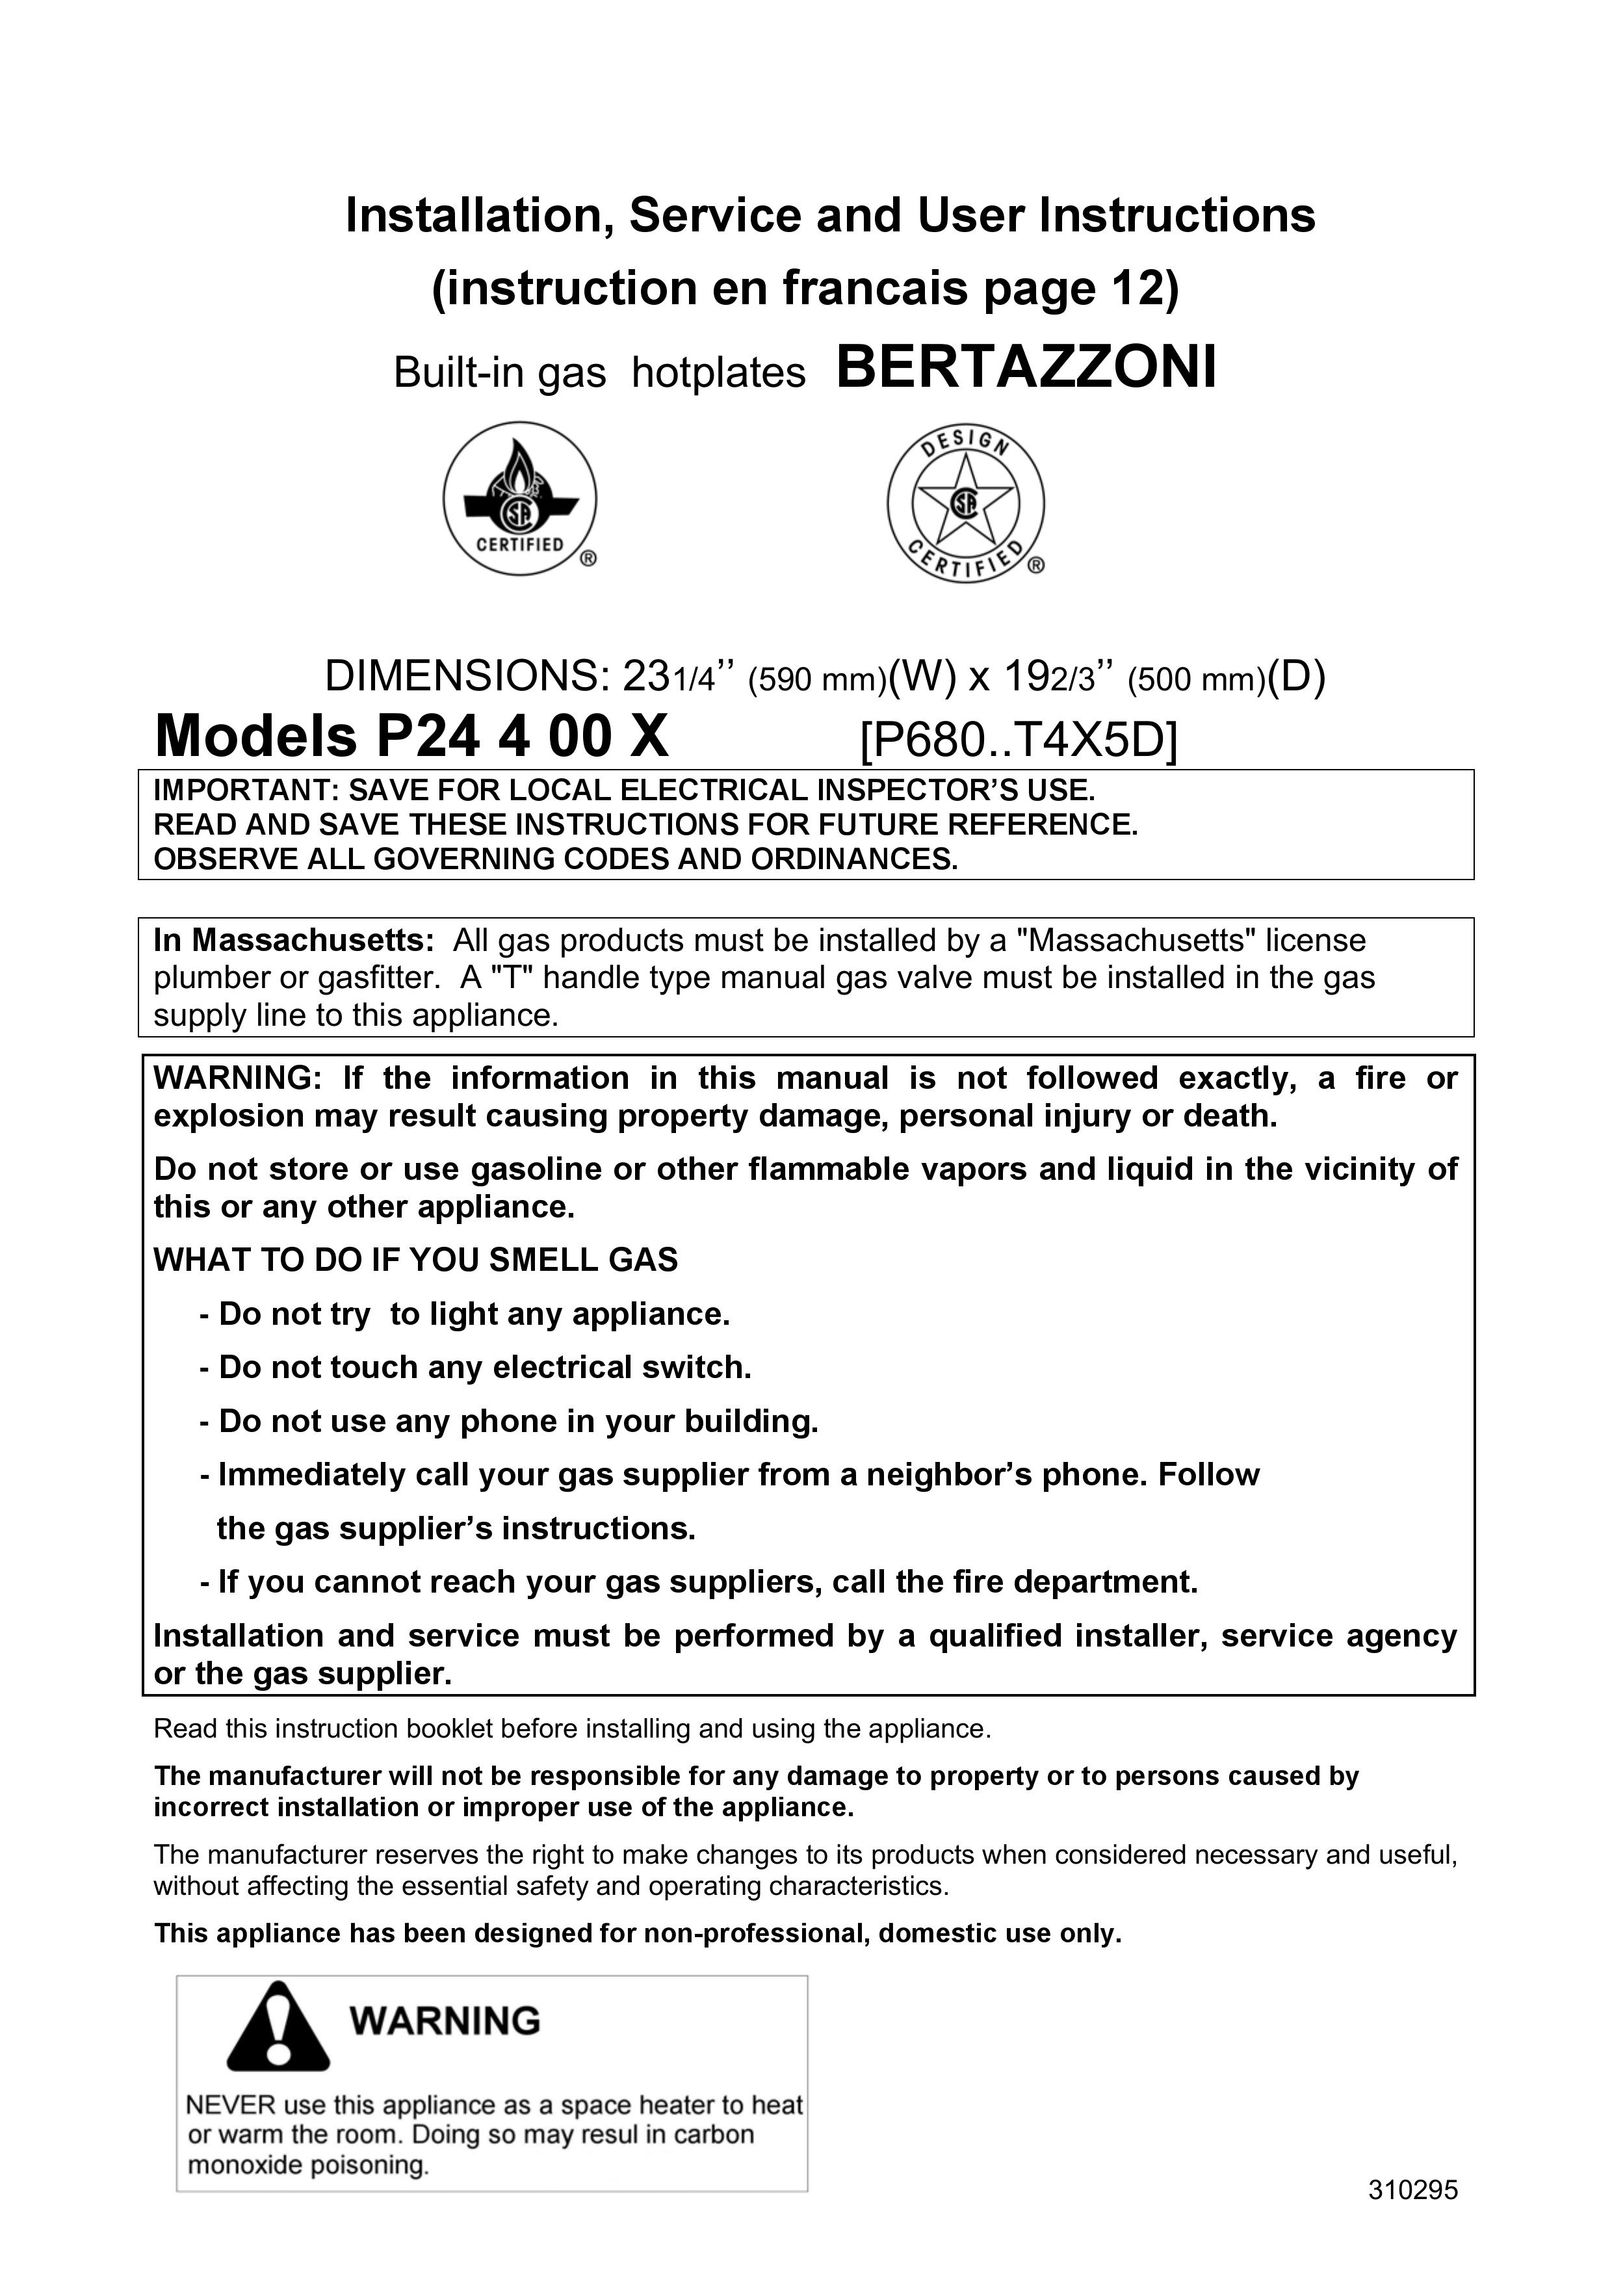 Bertazzoni P24 4 00 X Food Warmer User Manual